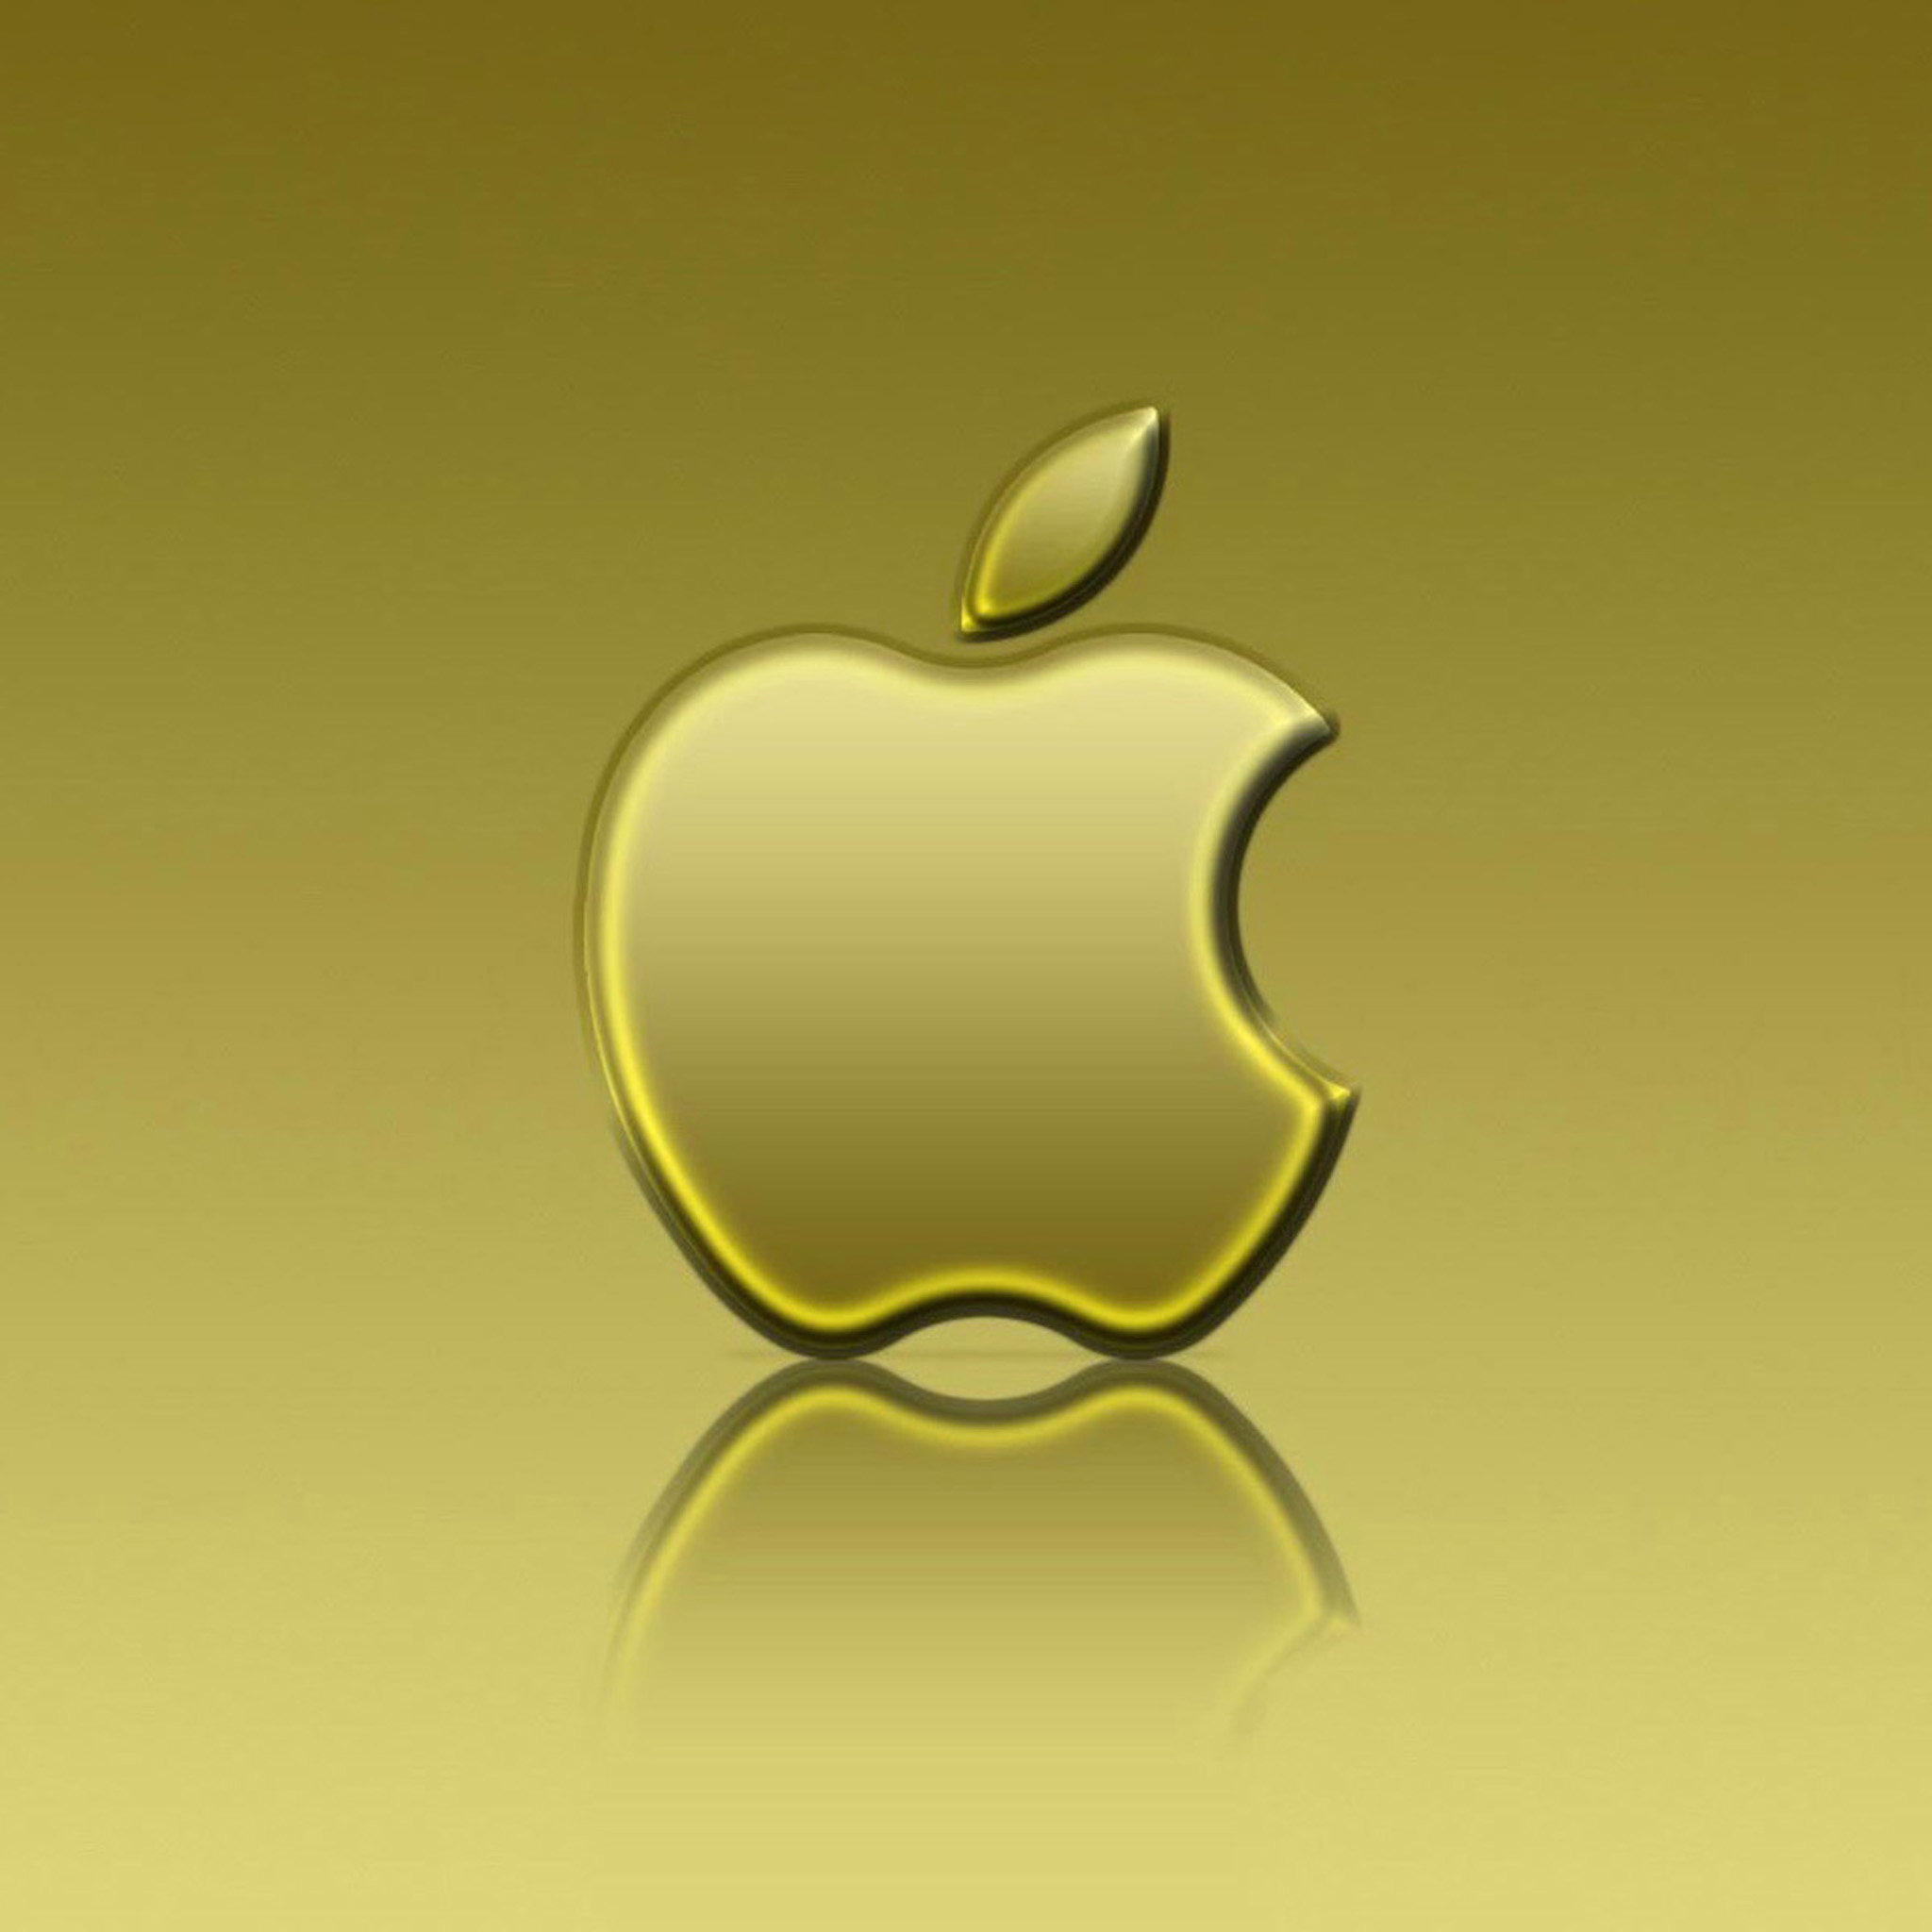 Golden Apple iPad Air Wallpaper